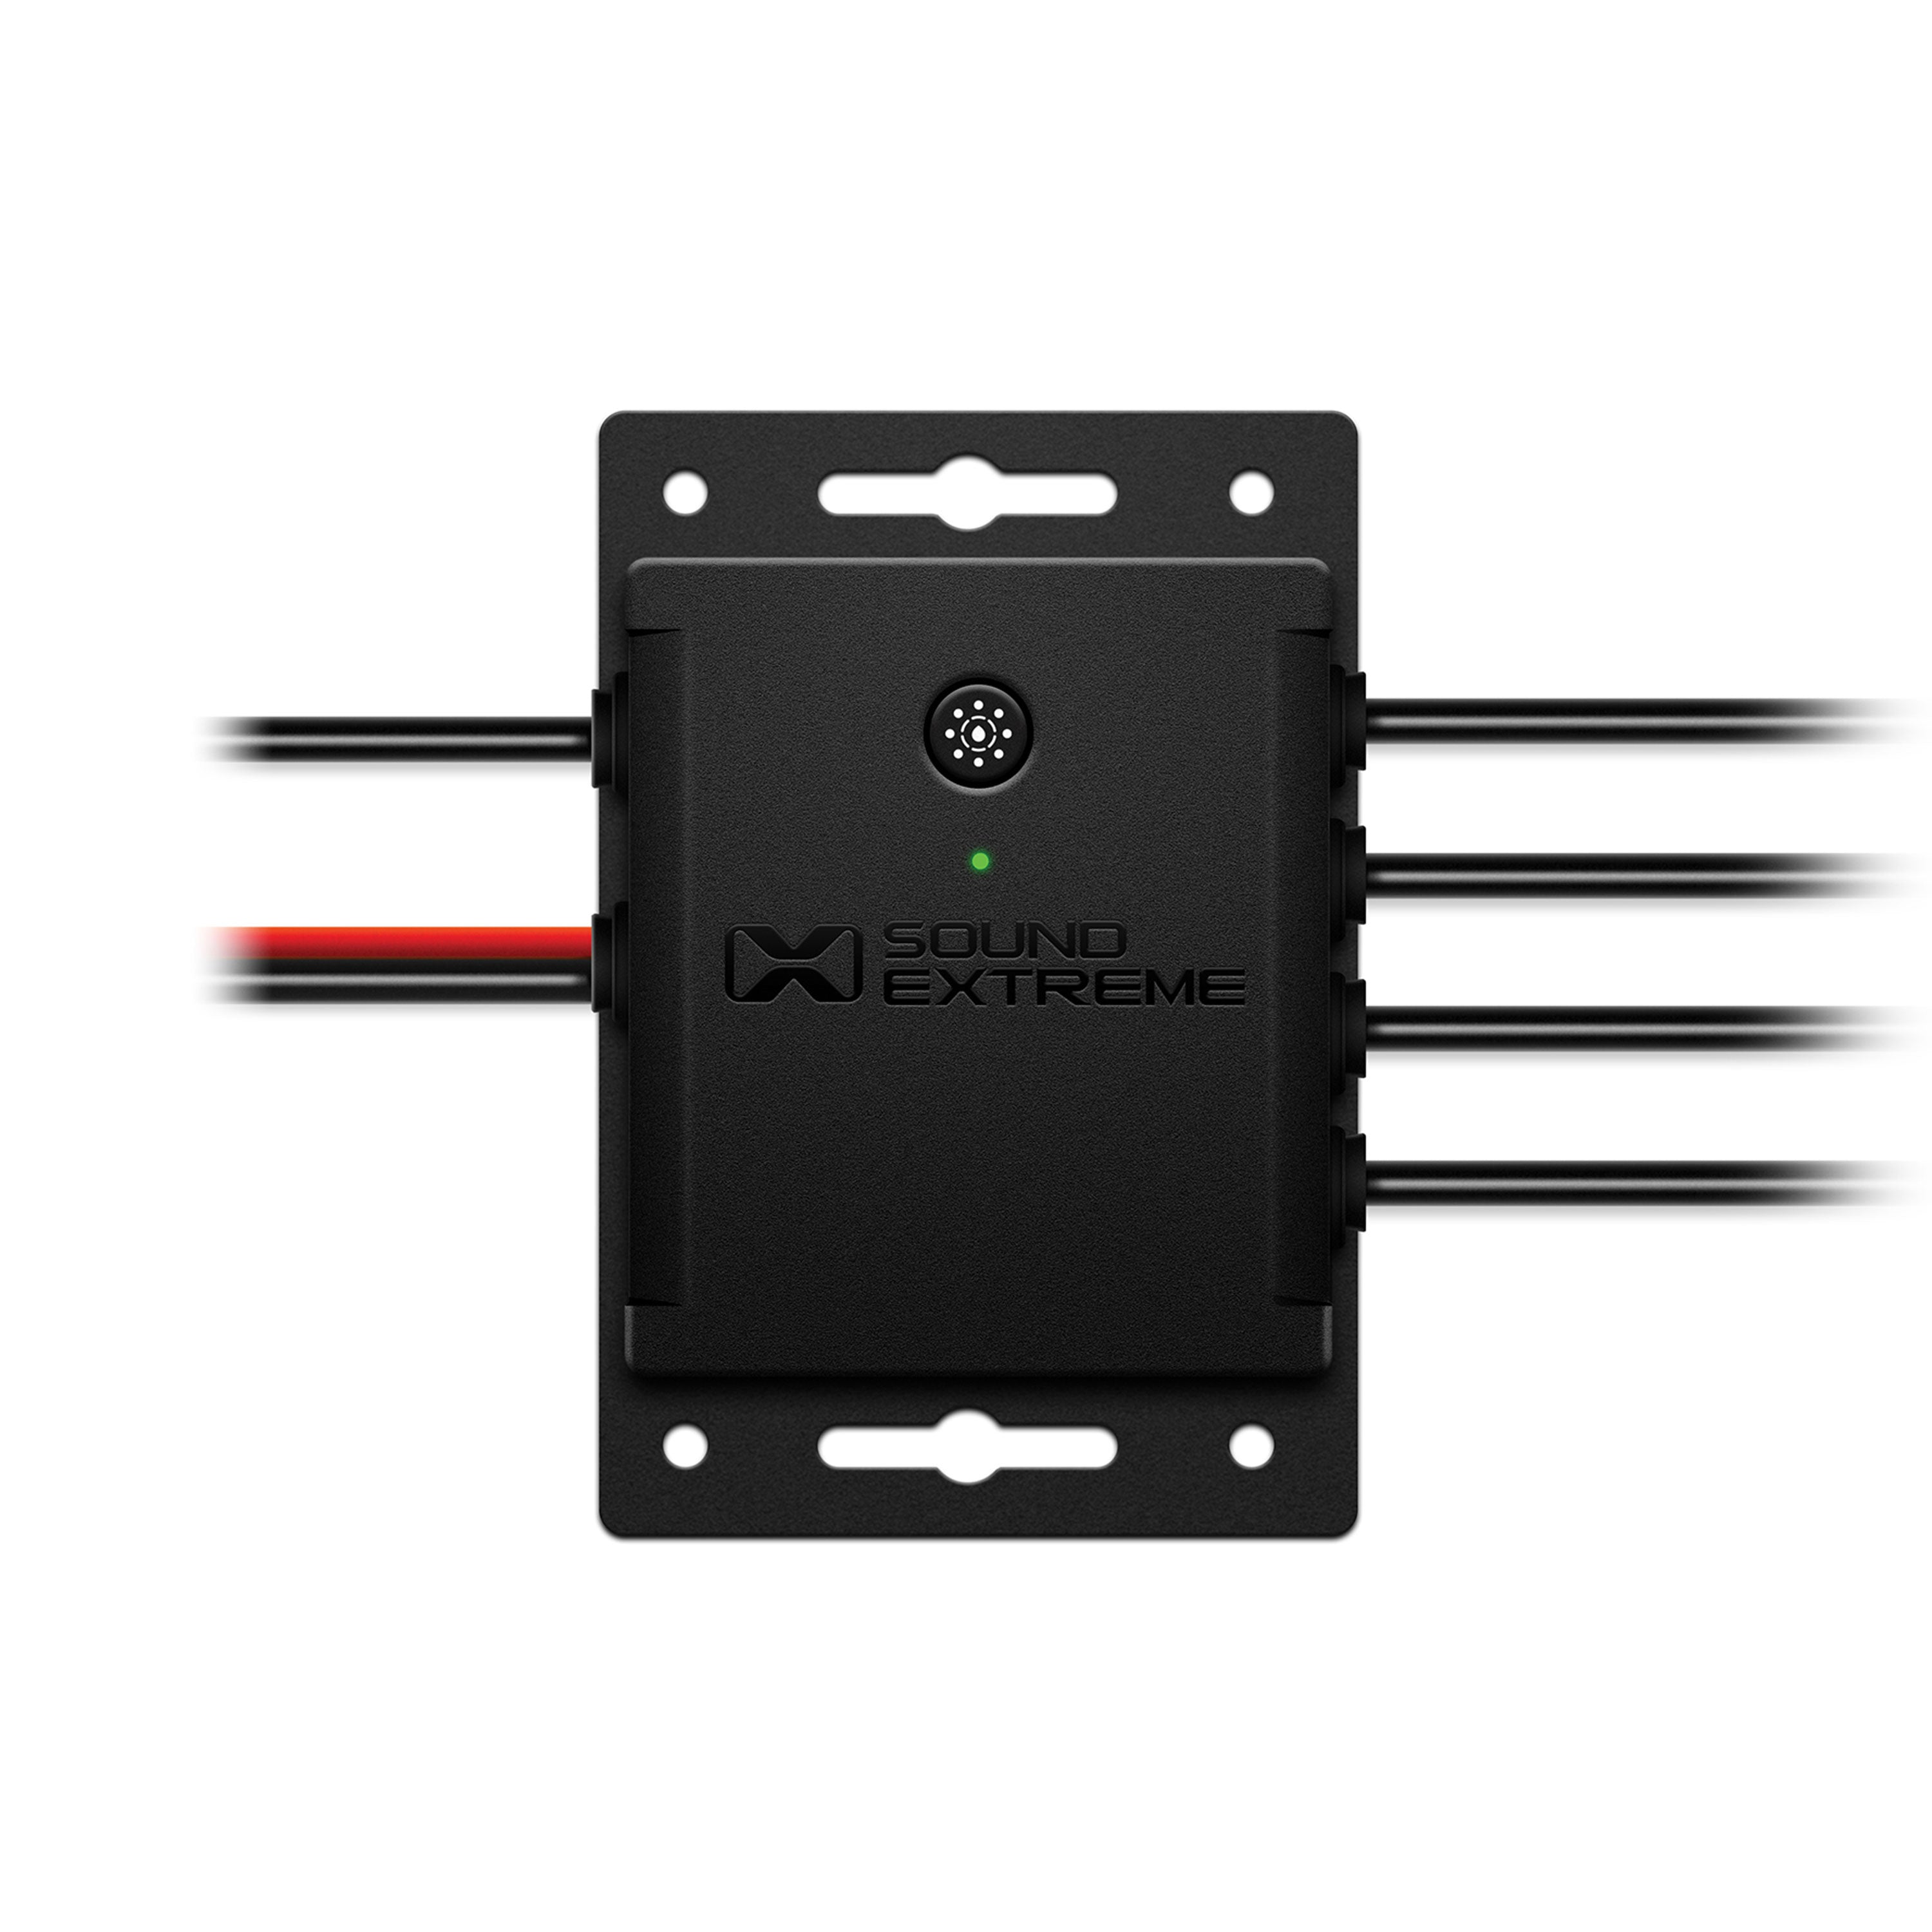 Extreme LEDCast Controller with 4 Zones - SoundExtreme